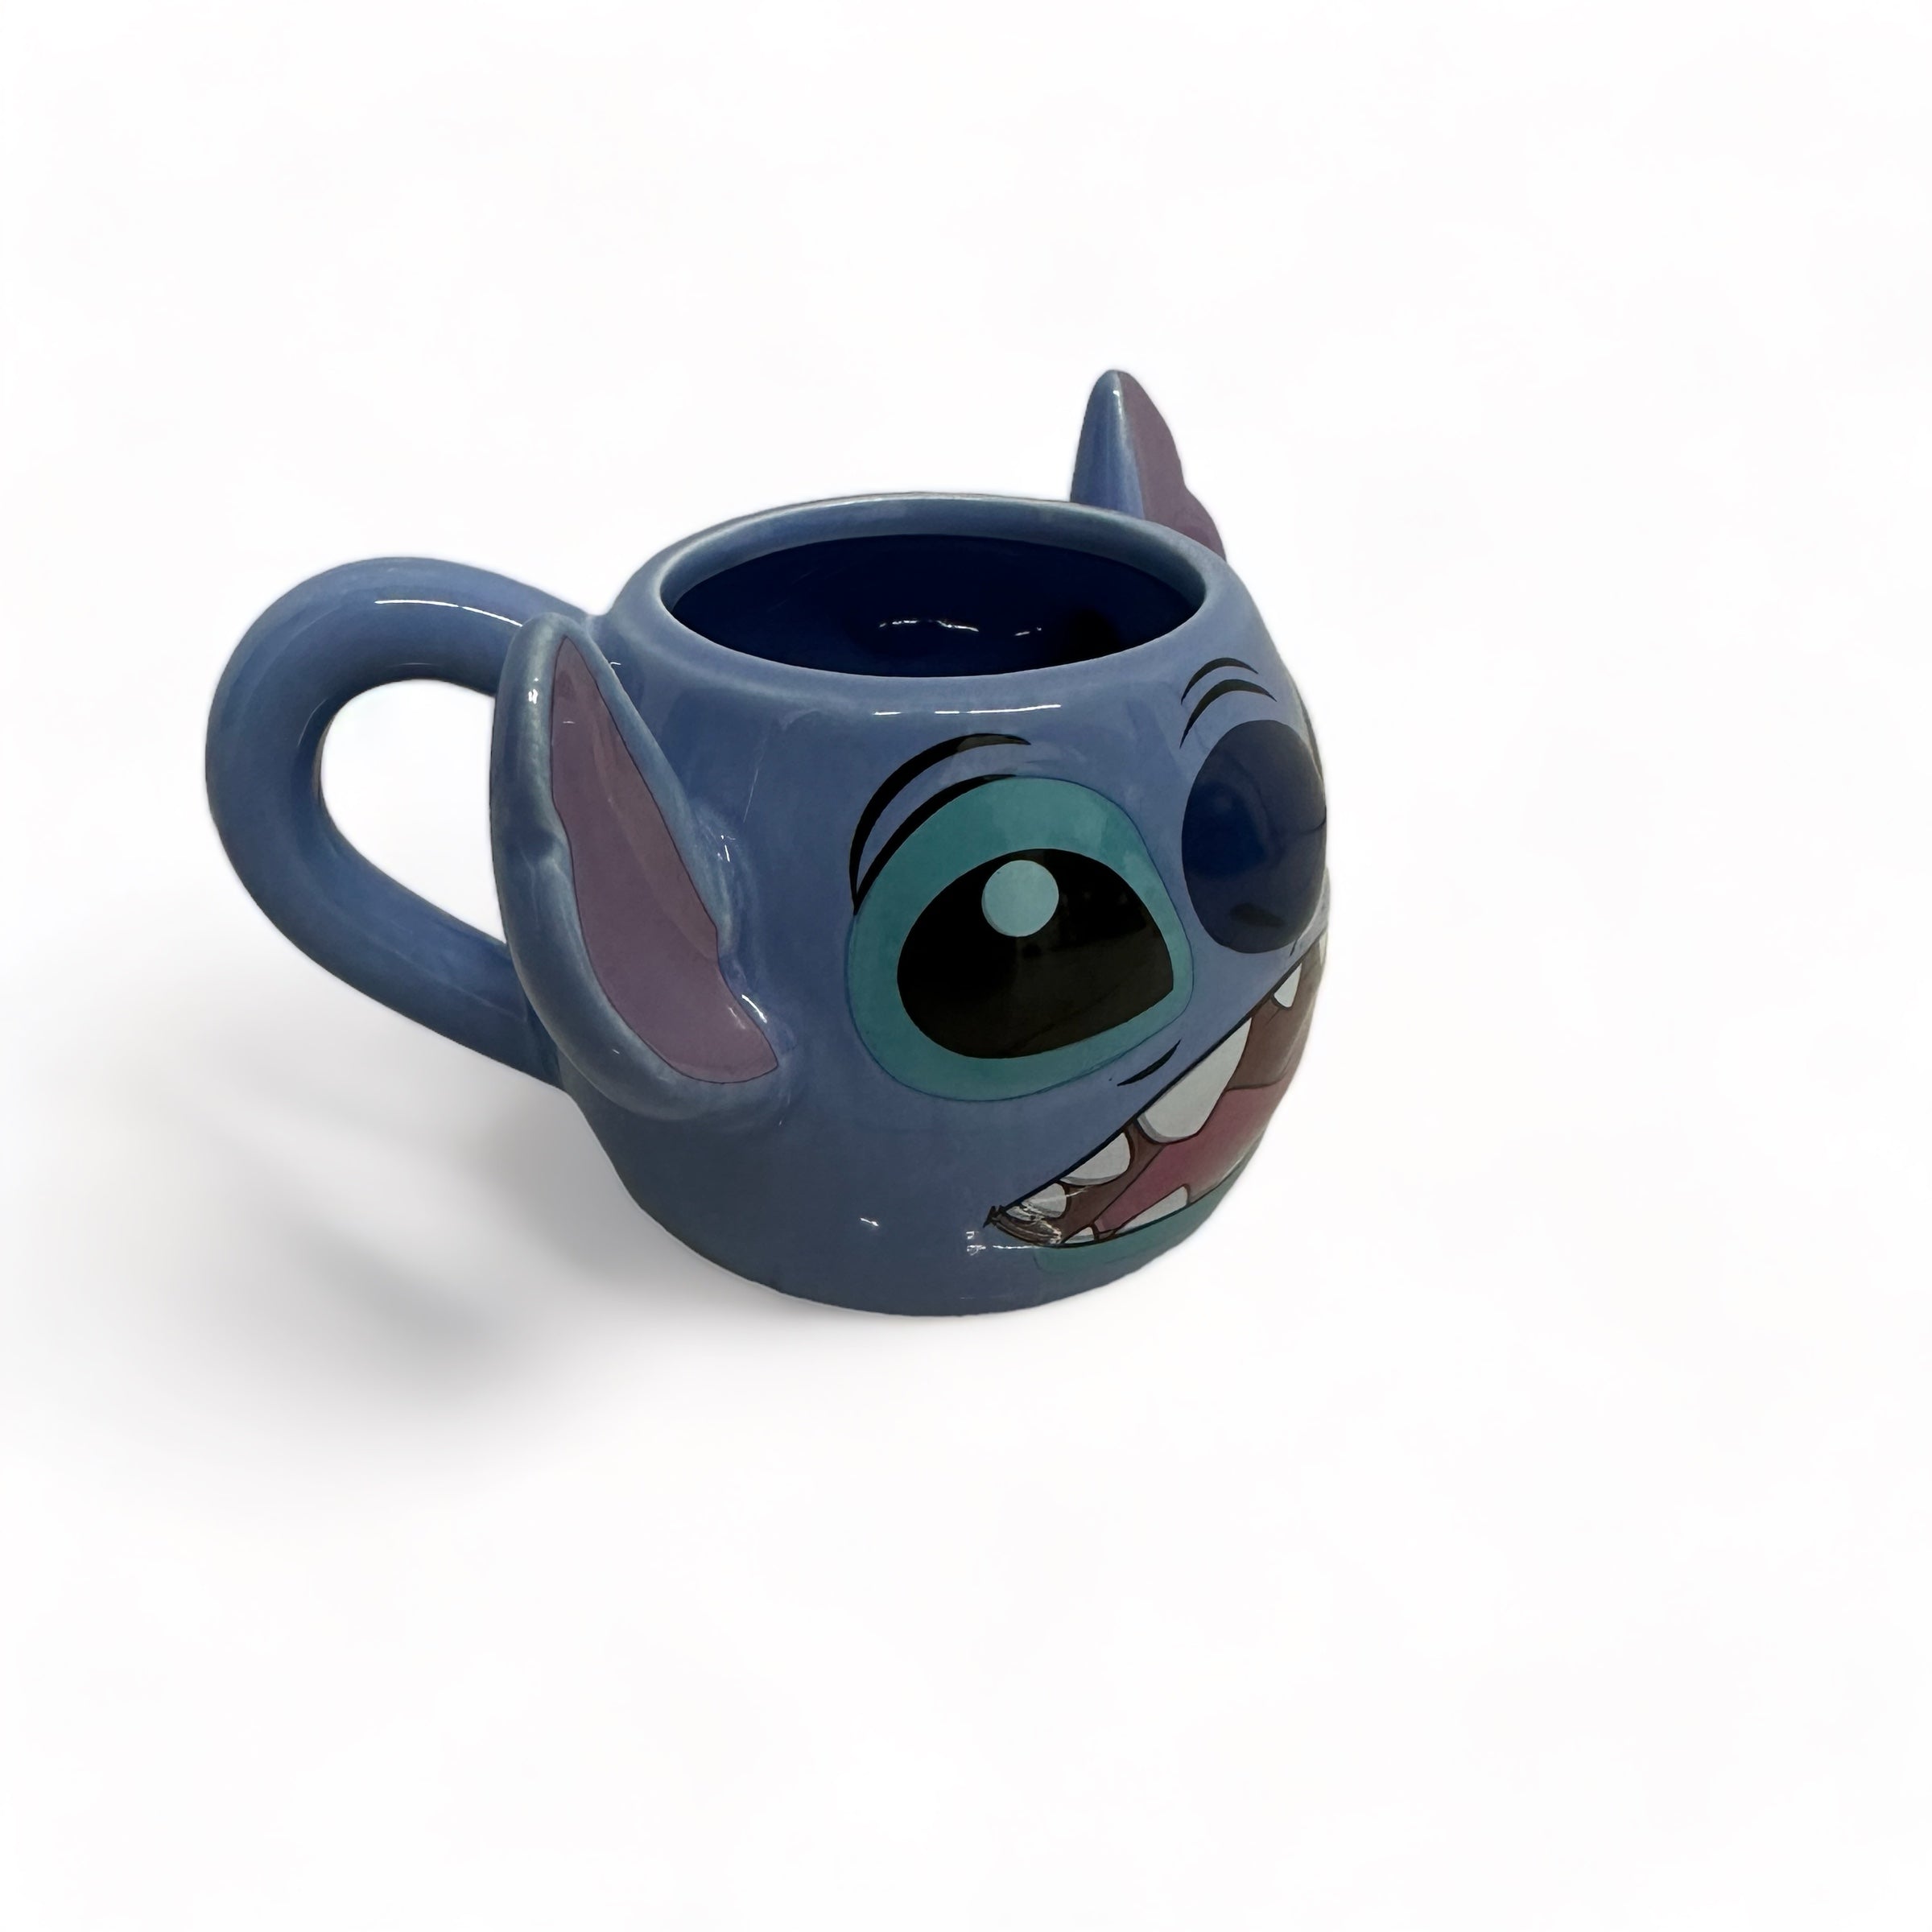 Taza Stitch 3D Disney Lilo & Stitch Ceramica